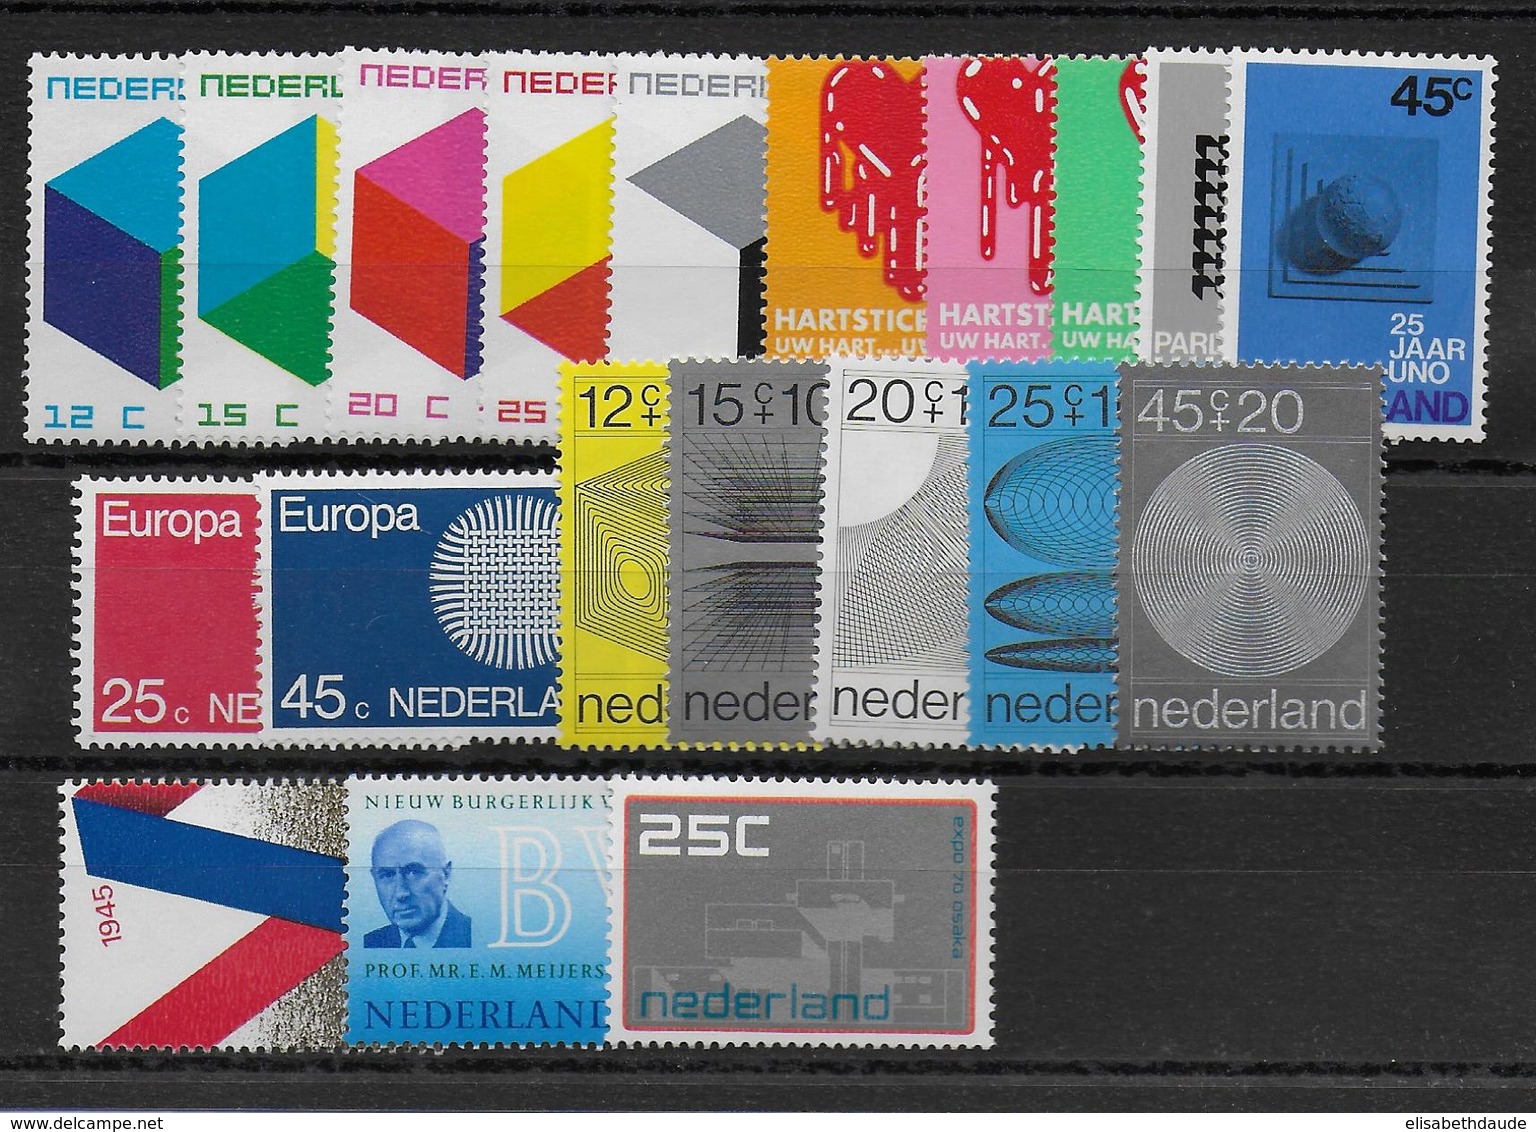 NEDERLAND - ANNEE COMPLETE 1970 ** MNH - COTE YVERT = 25 EUR. - 20 VALEURS - Años Completos